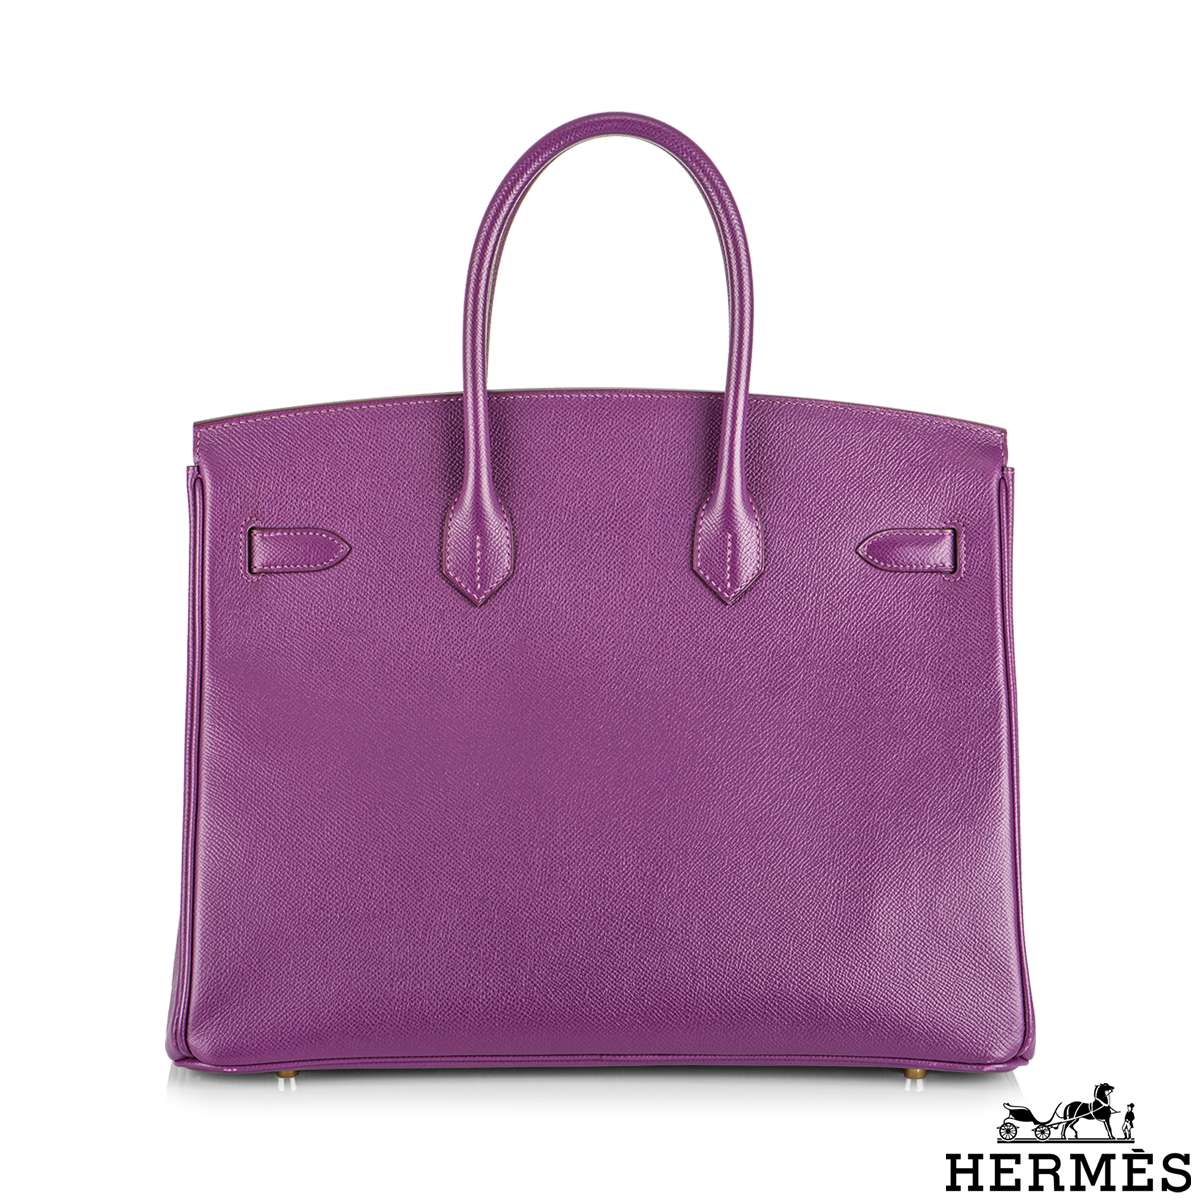 Hermés Birkin 35 Handbag